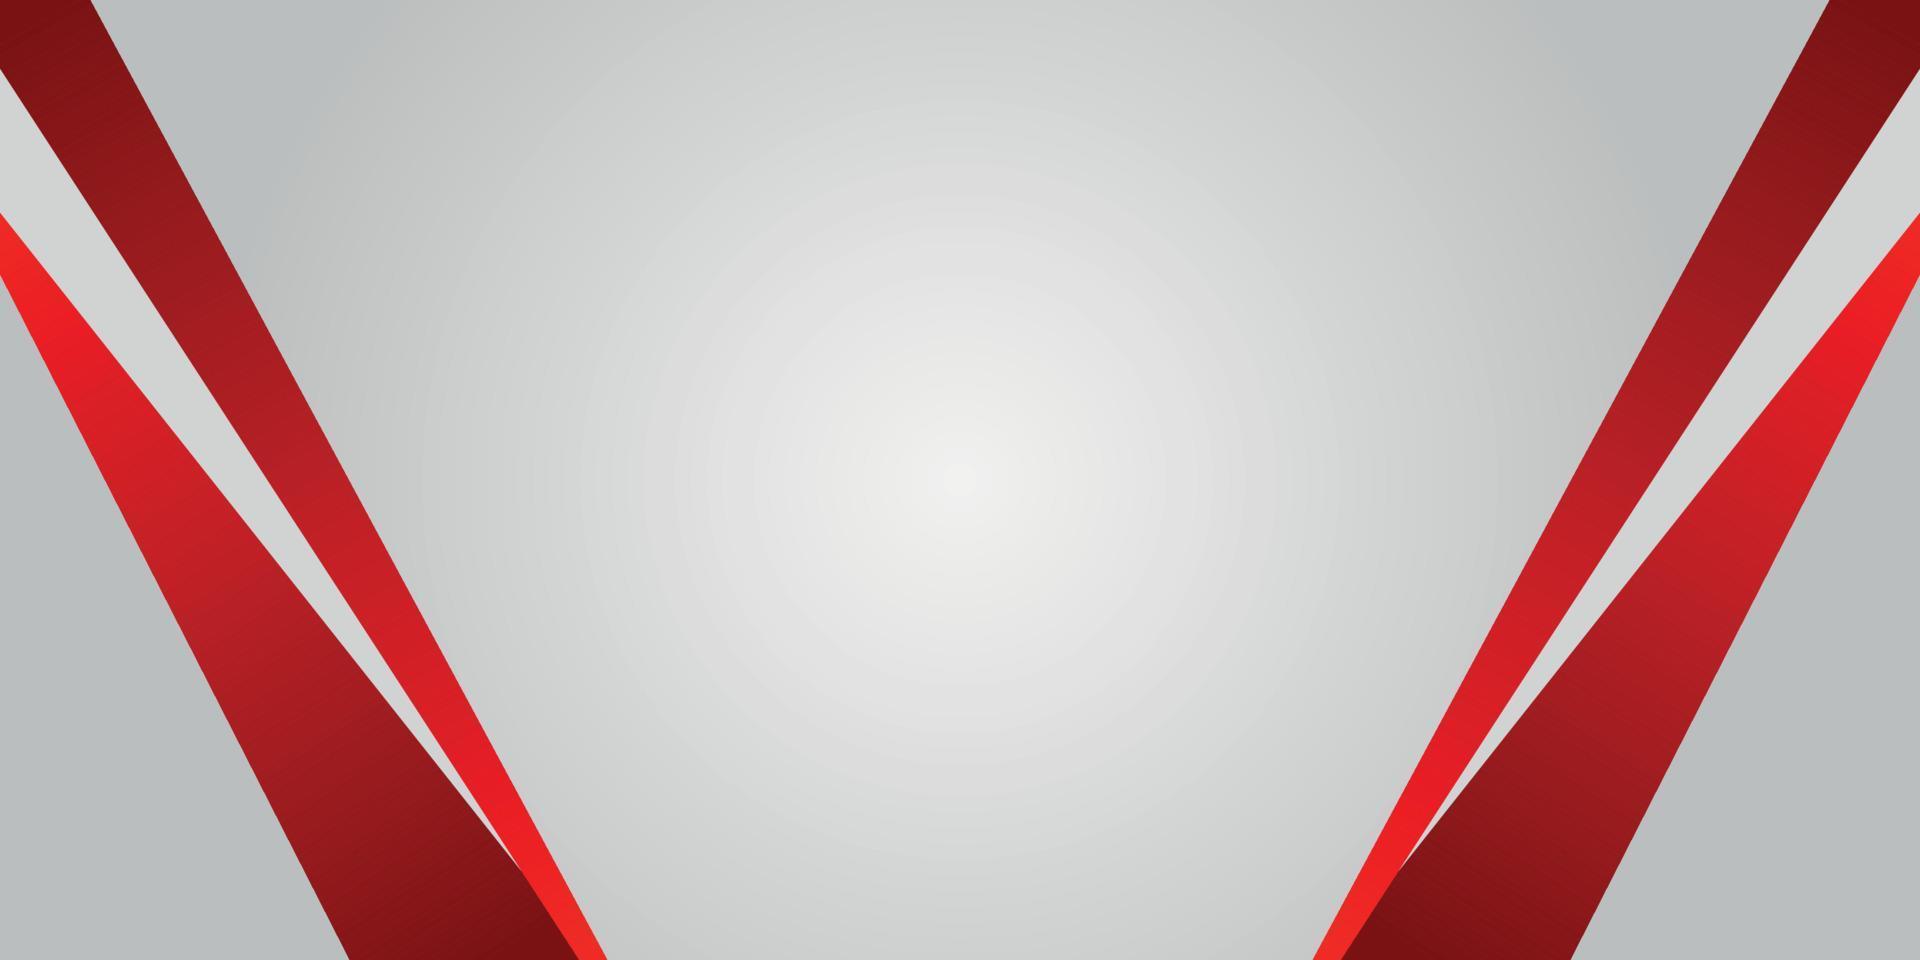 abstract rood grijs grijs pijl wit blanco ruimte ontwerp modern futuristische achtergrond vector illustratie. vector illustratie ontwerp voor presentatie, banier, omslag, web, folder, kaart, poster